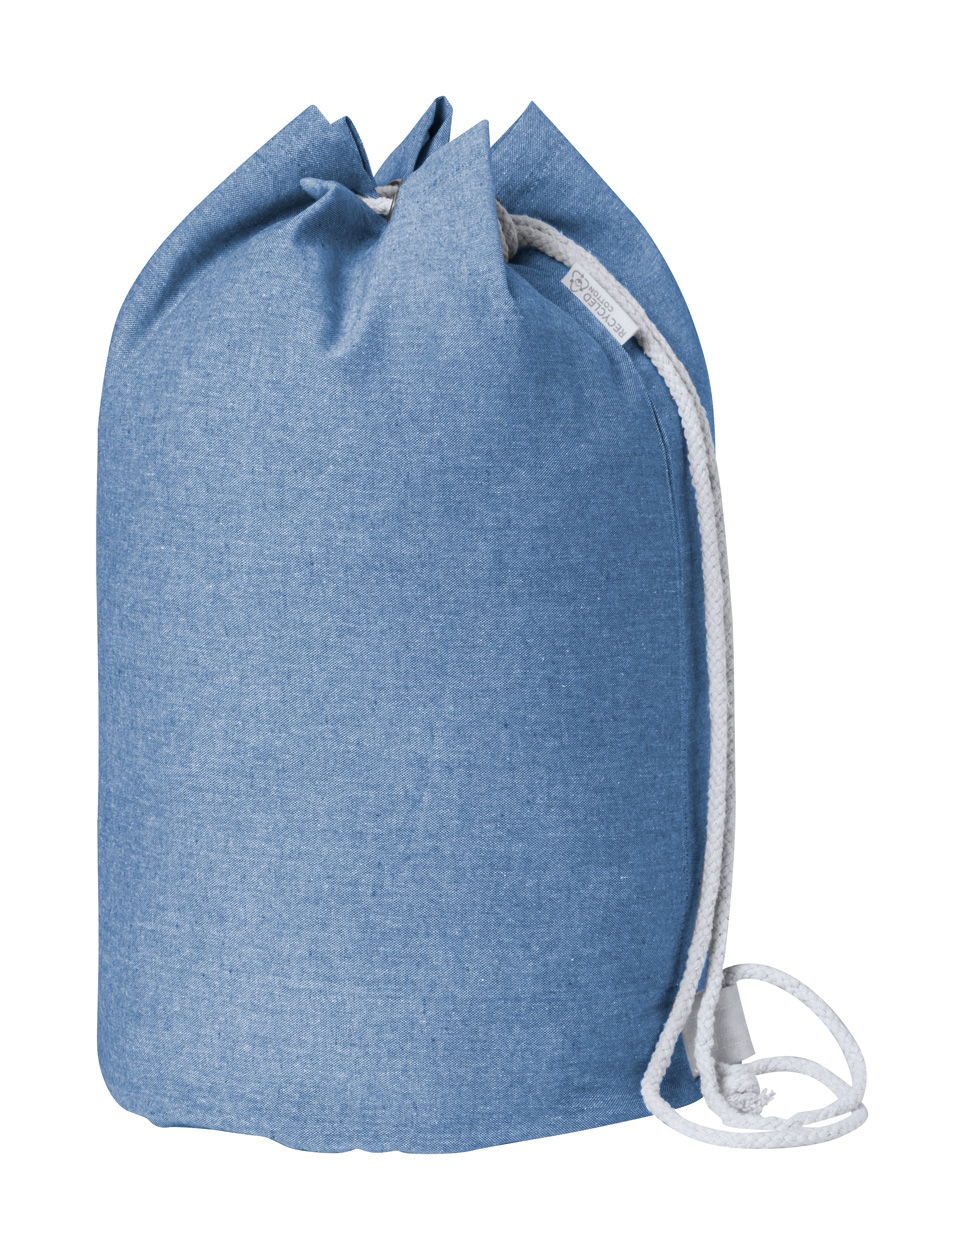 Bandam boat bag - blue